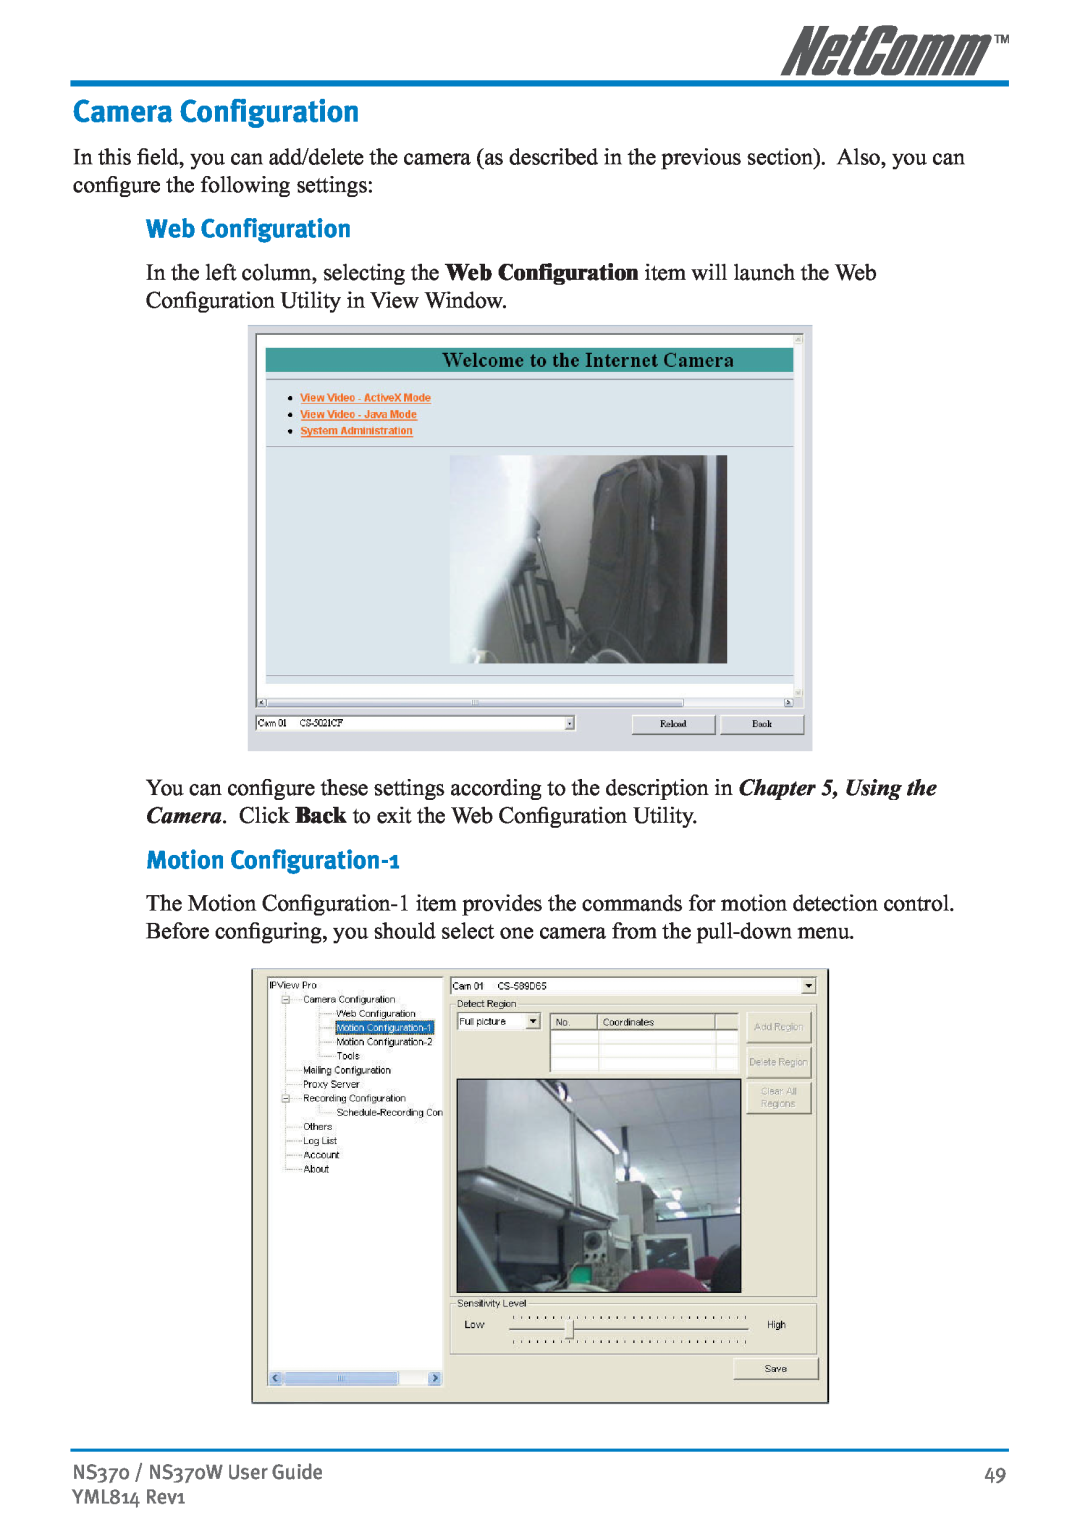 NetComm NS370W manual Camera Configuration, Motion Configuration-1, Web Configuration 